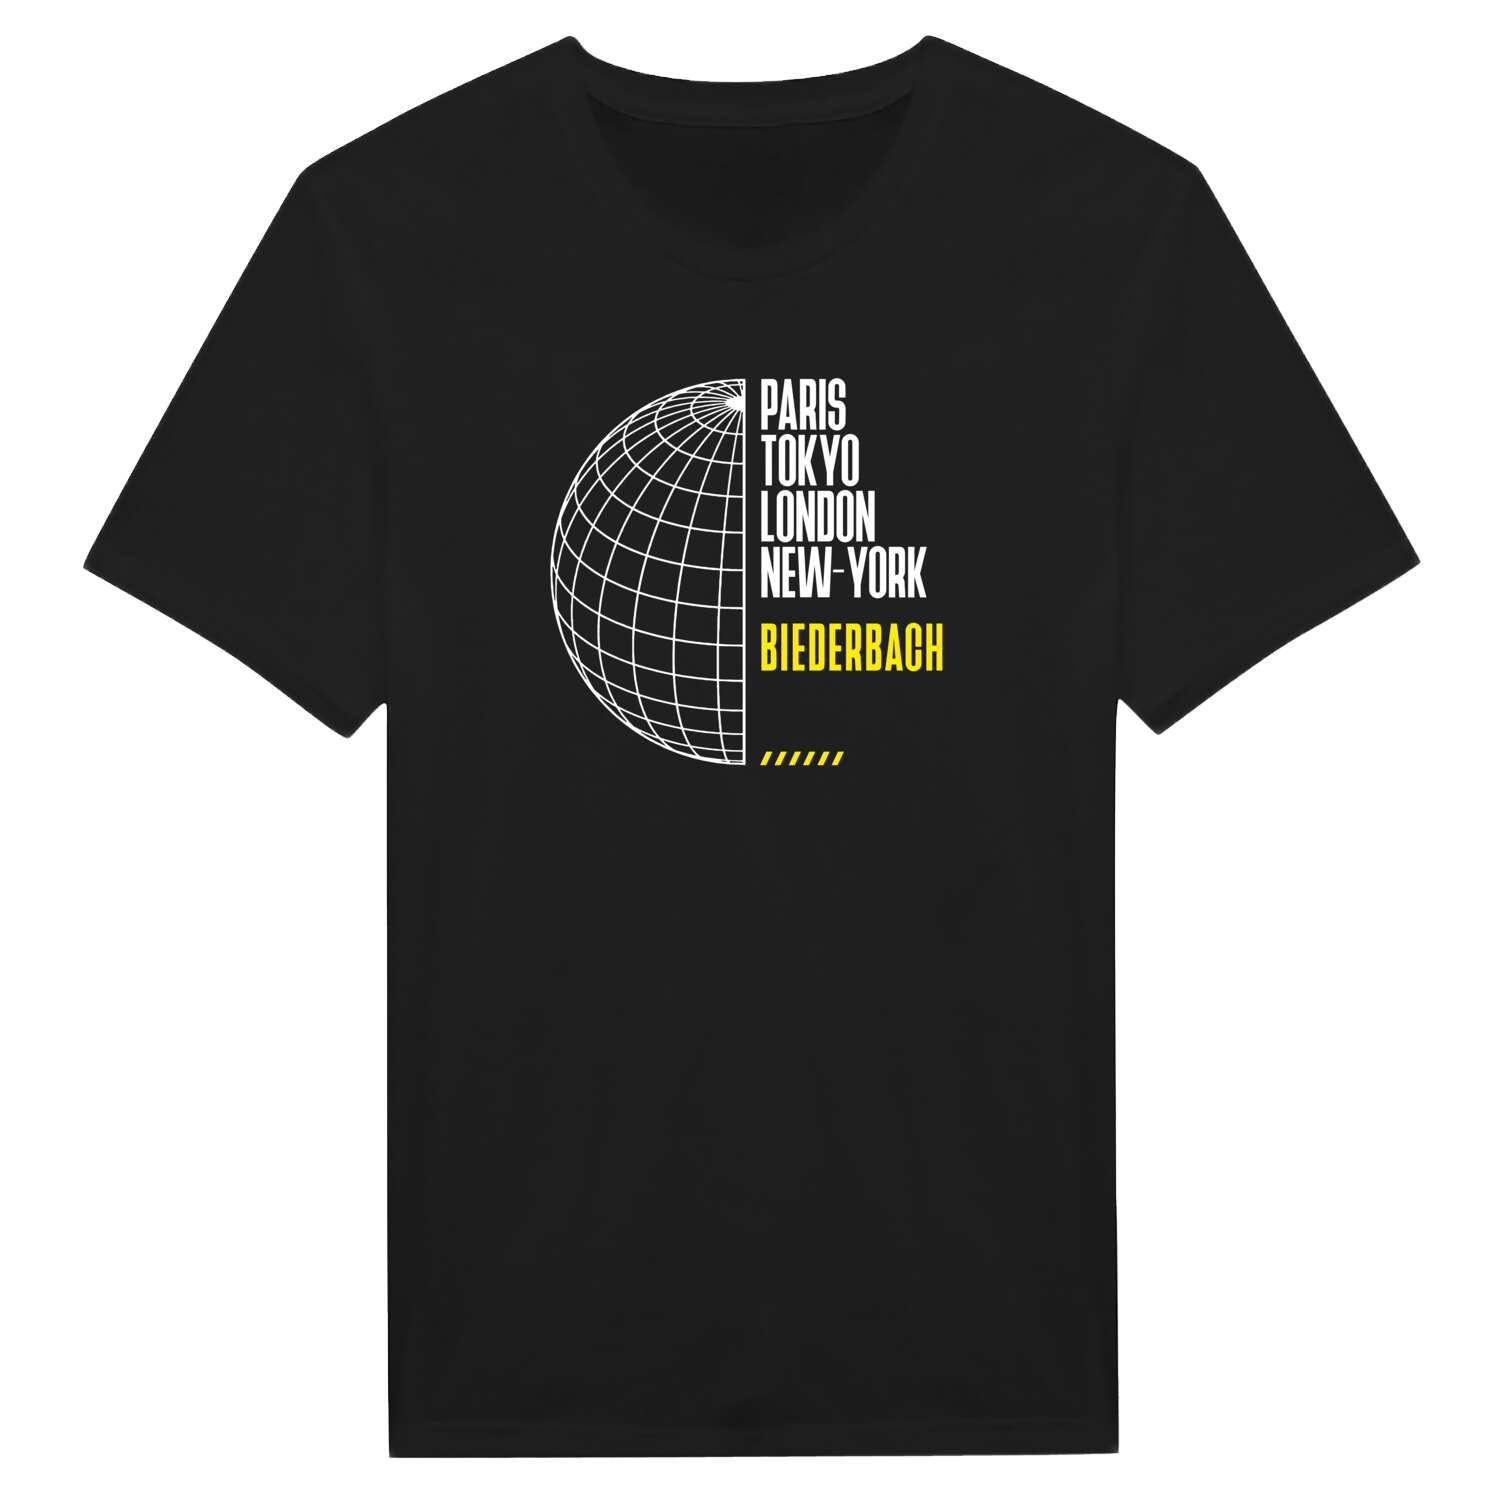 Biederbach T-Shirt »Paris Tokyo London«